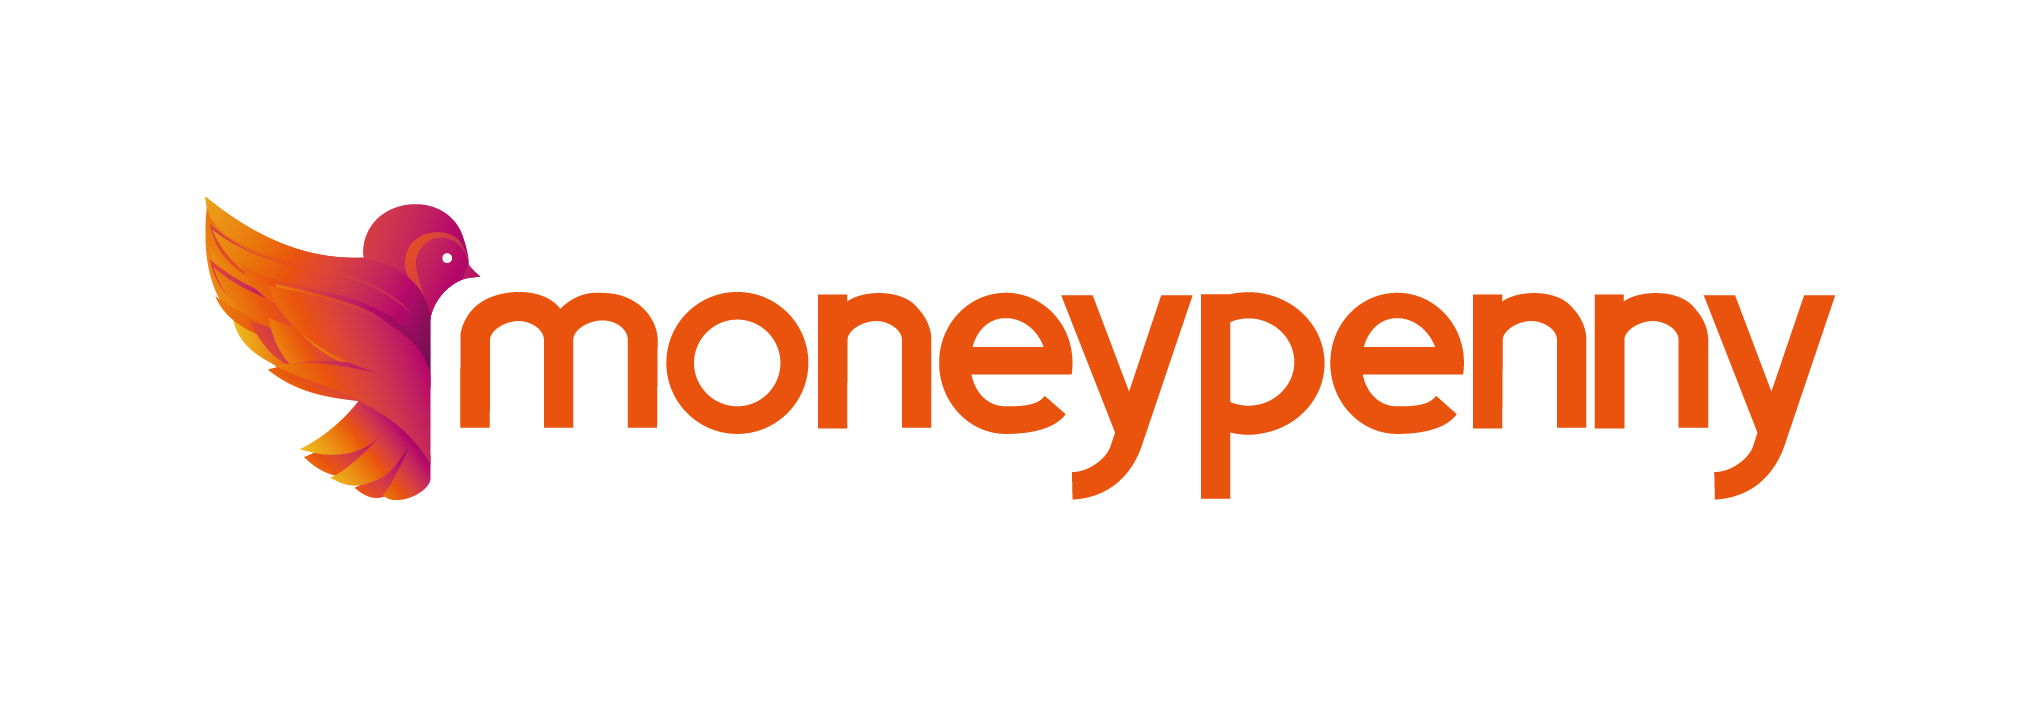 Moneypenny logo cmyk